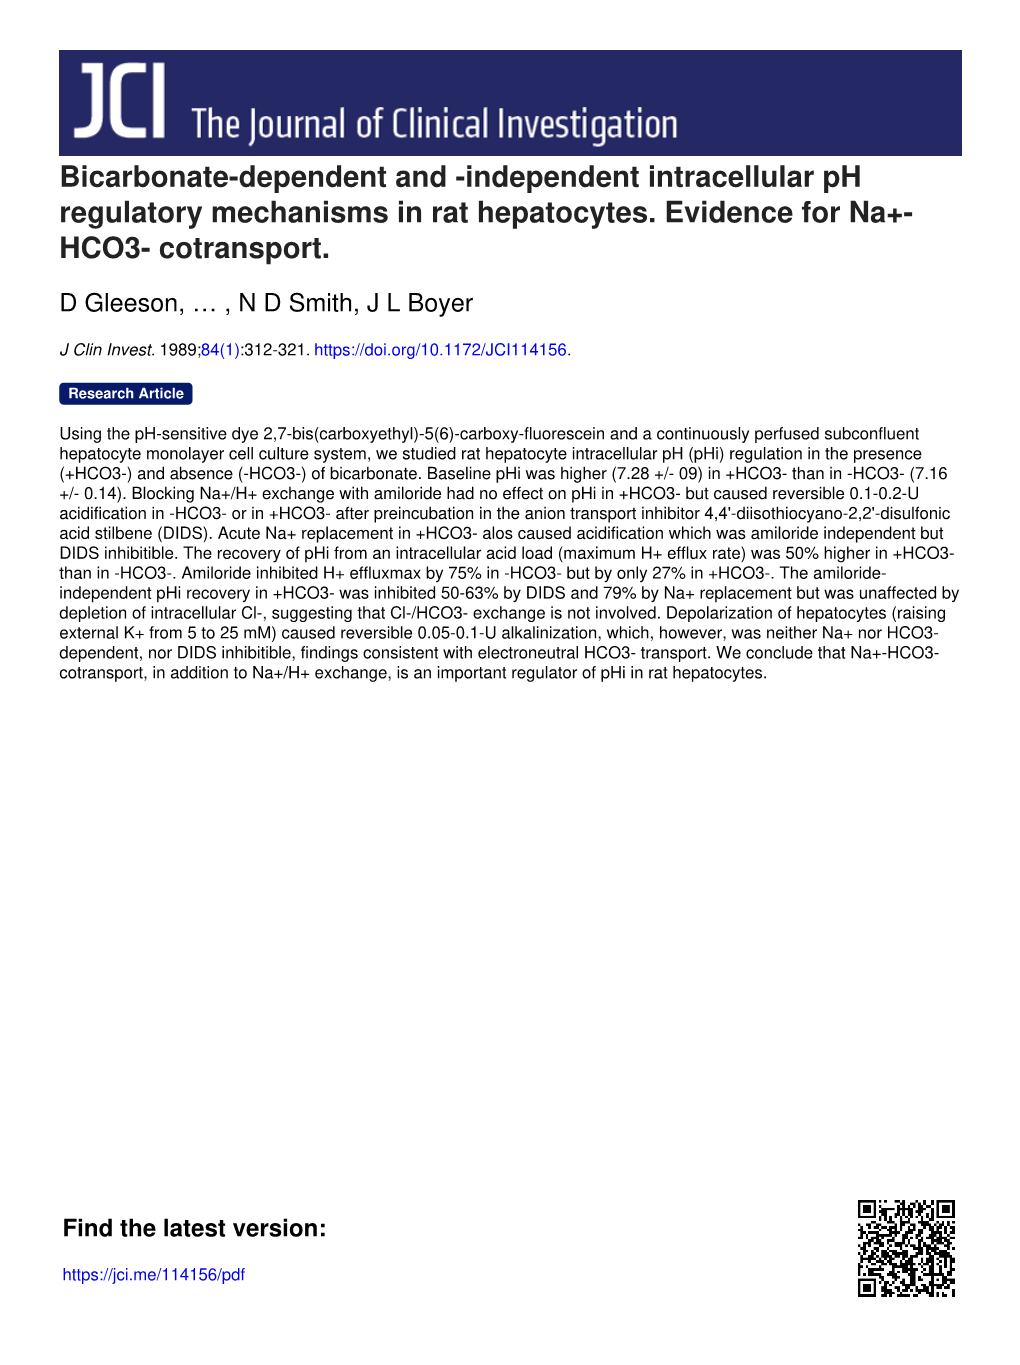 Bicarbonate-Dependent and -Independent Intracellular Ph Regulatory Mechanisms in Rat Hepatocytes